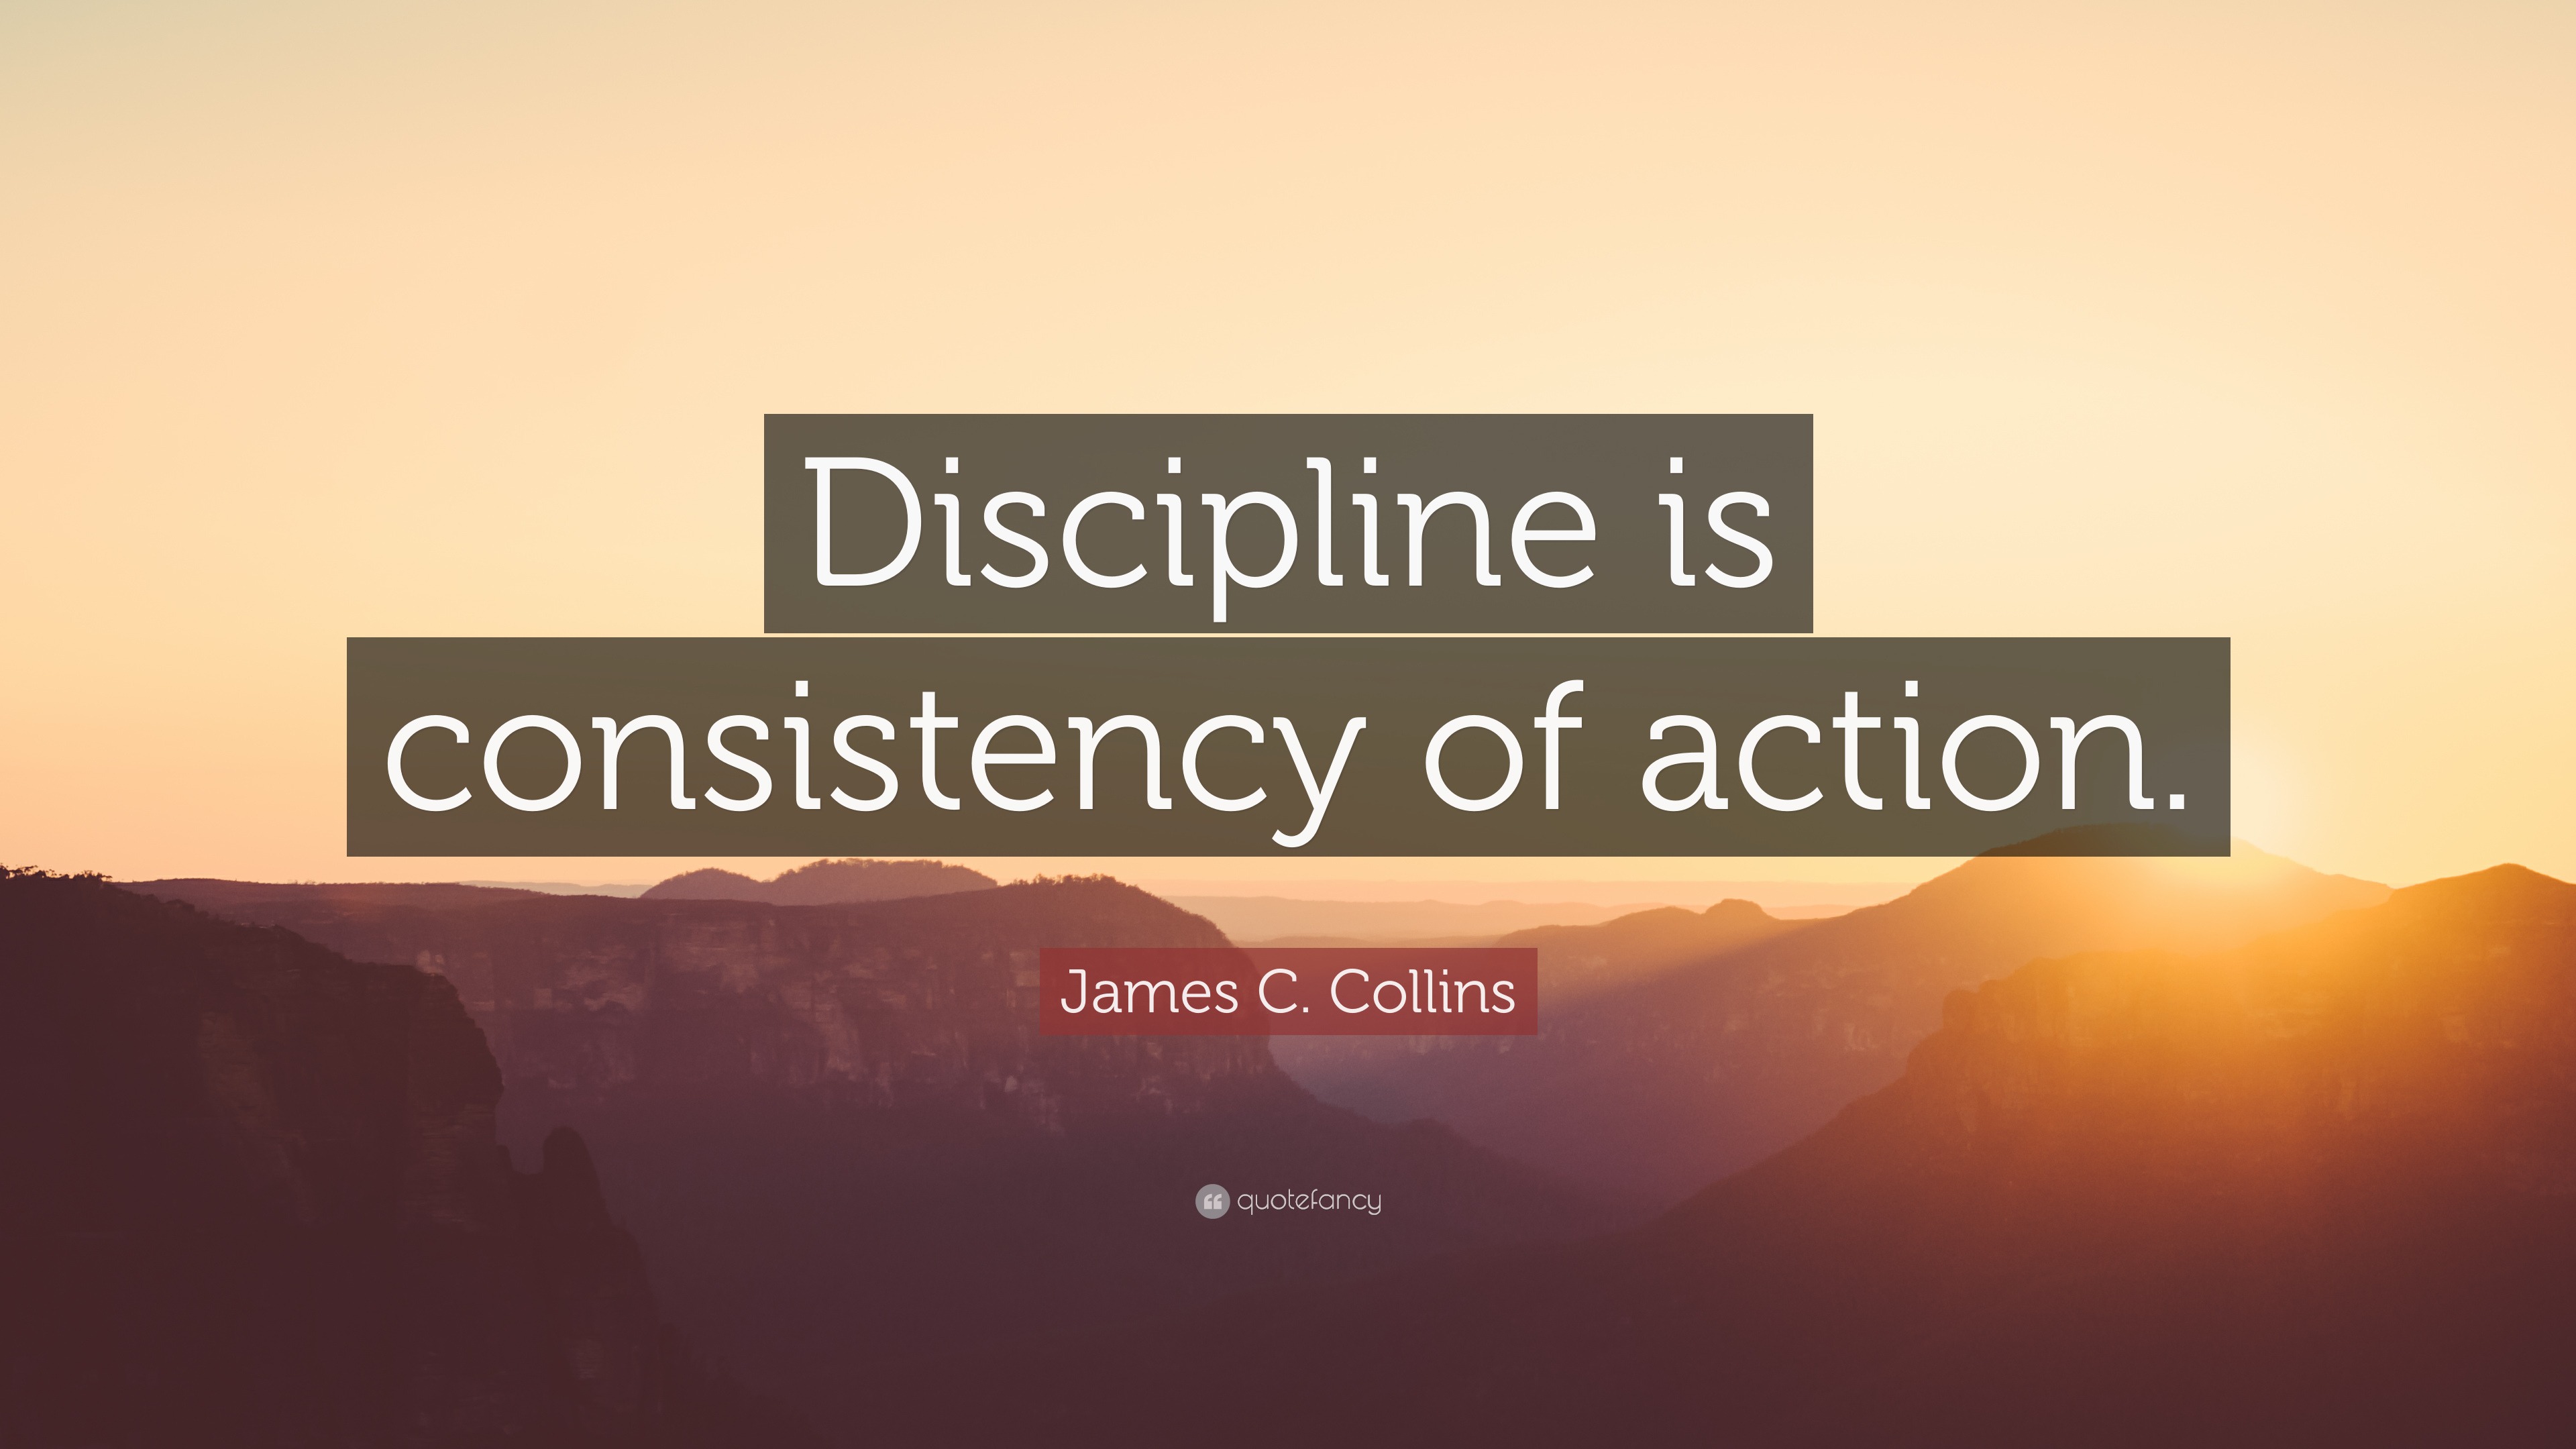 James C. Collins Quote: “Discipline is consistency of action.”